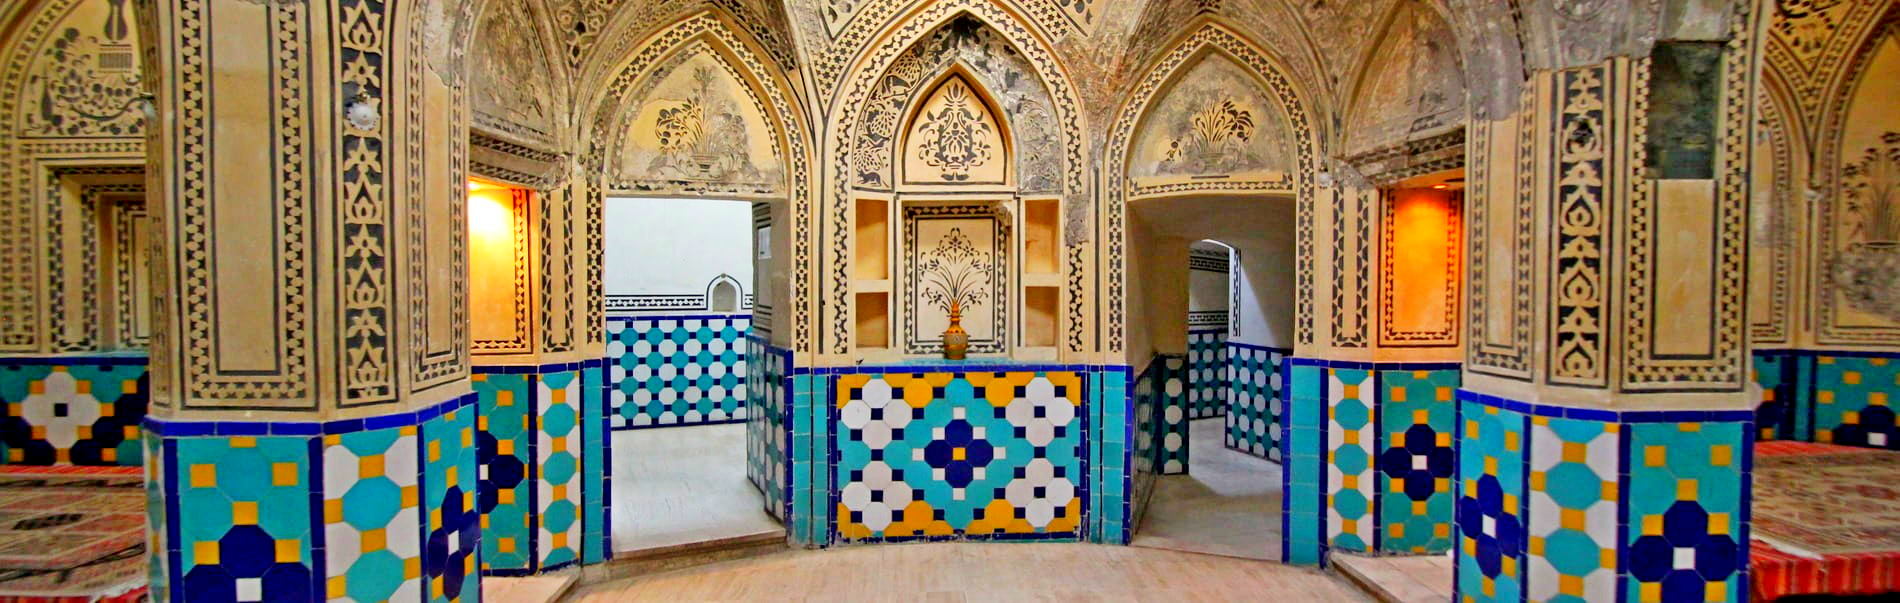 Баня султана Амира Ахмада